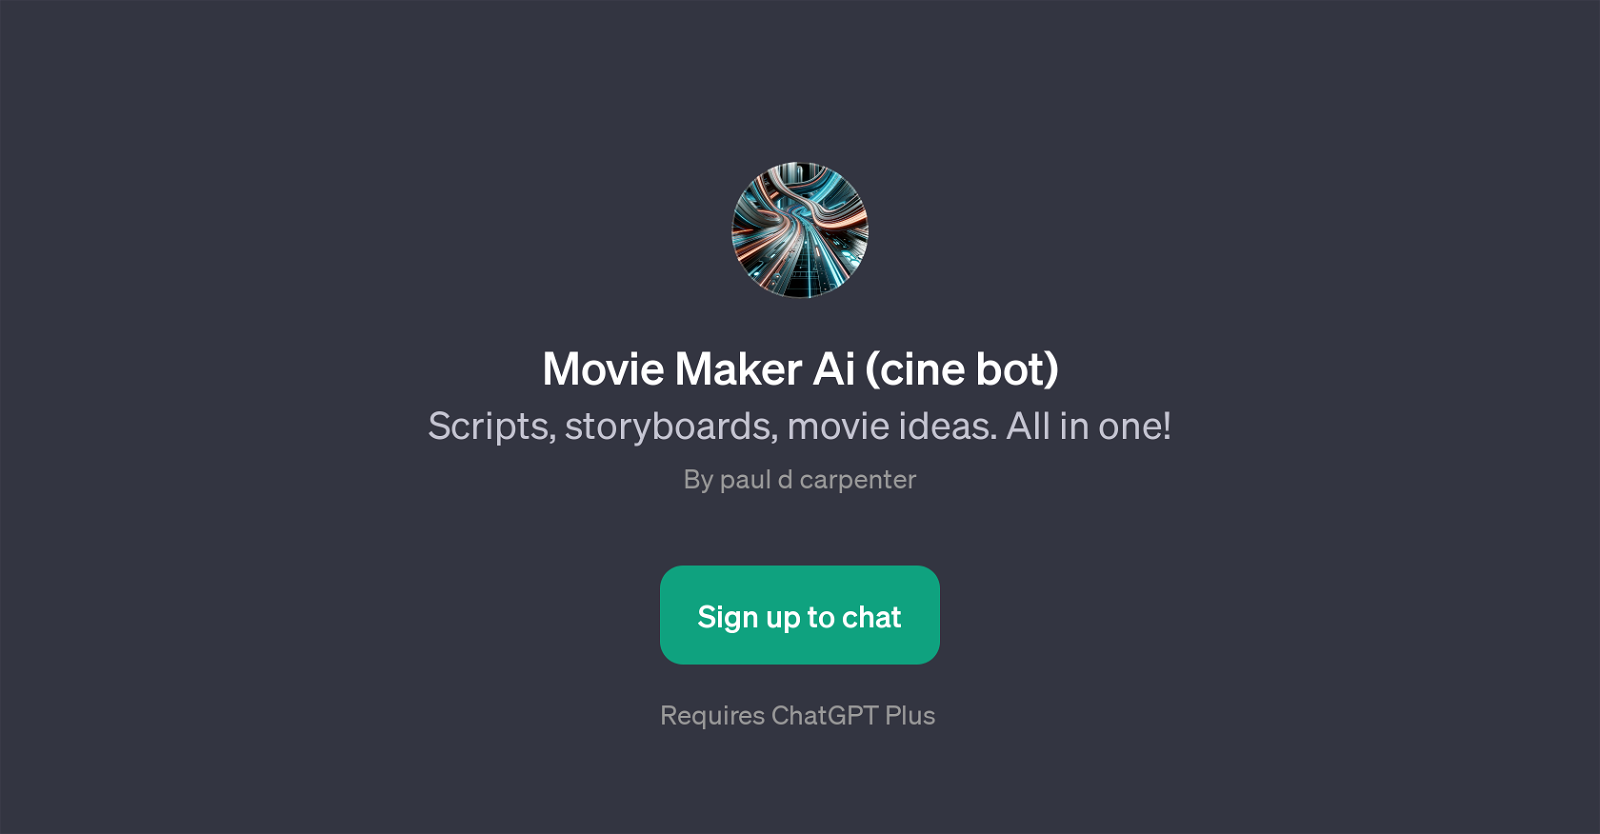 Movie Maker Ai (cine bot) website